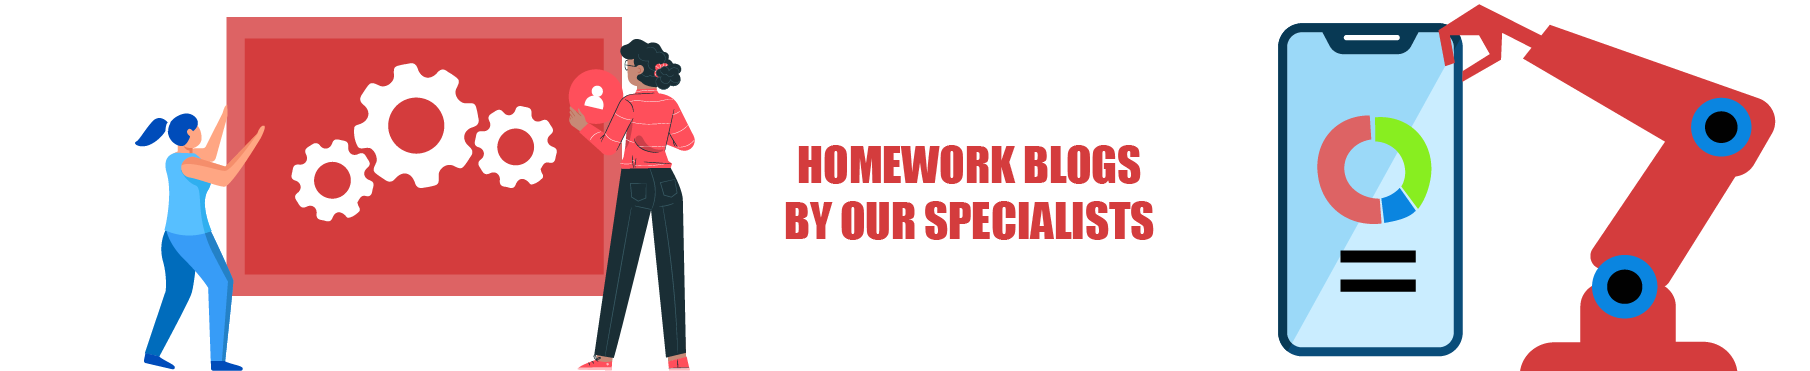 Engineering Economics Homework Blogs